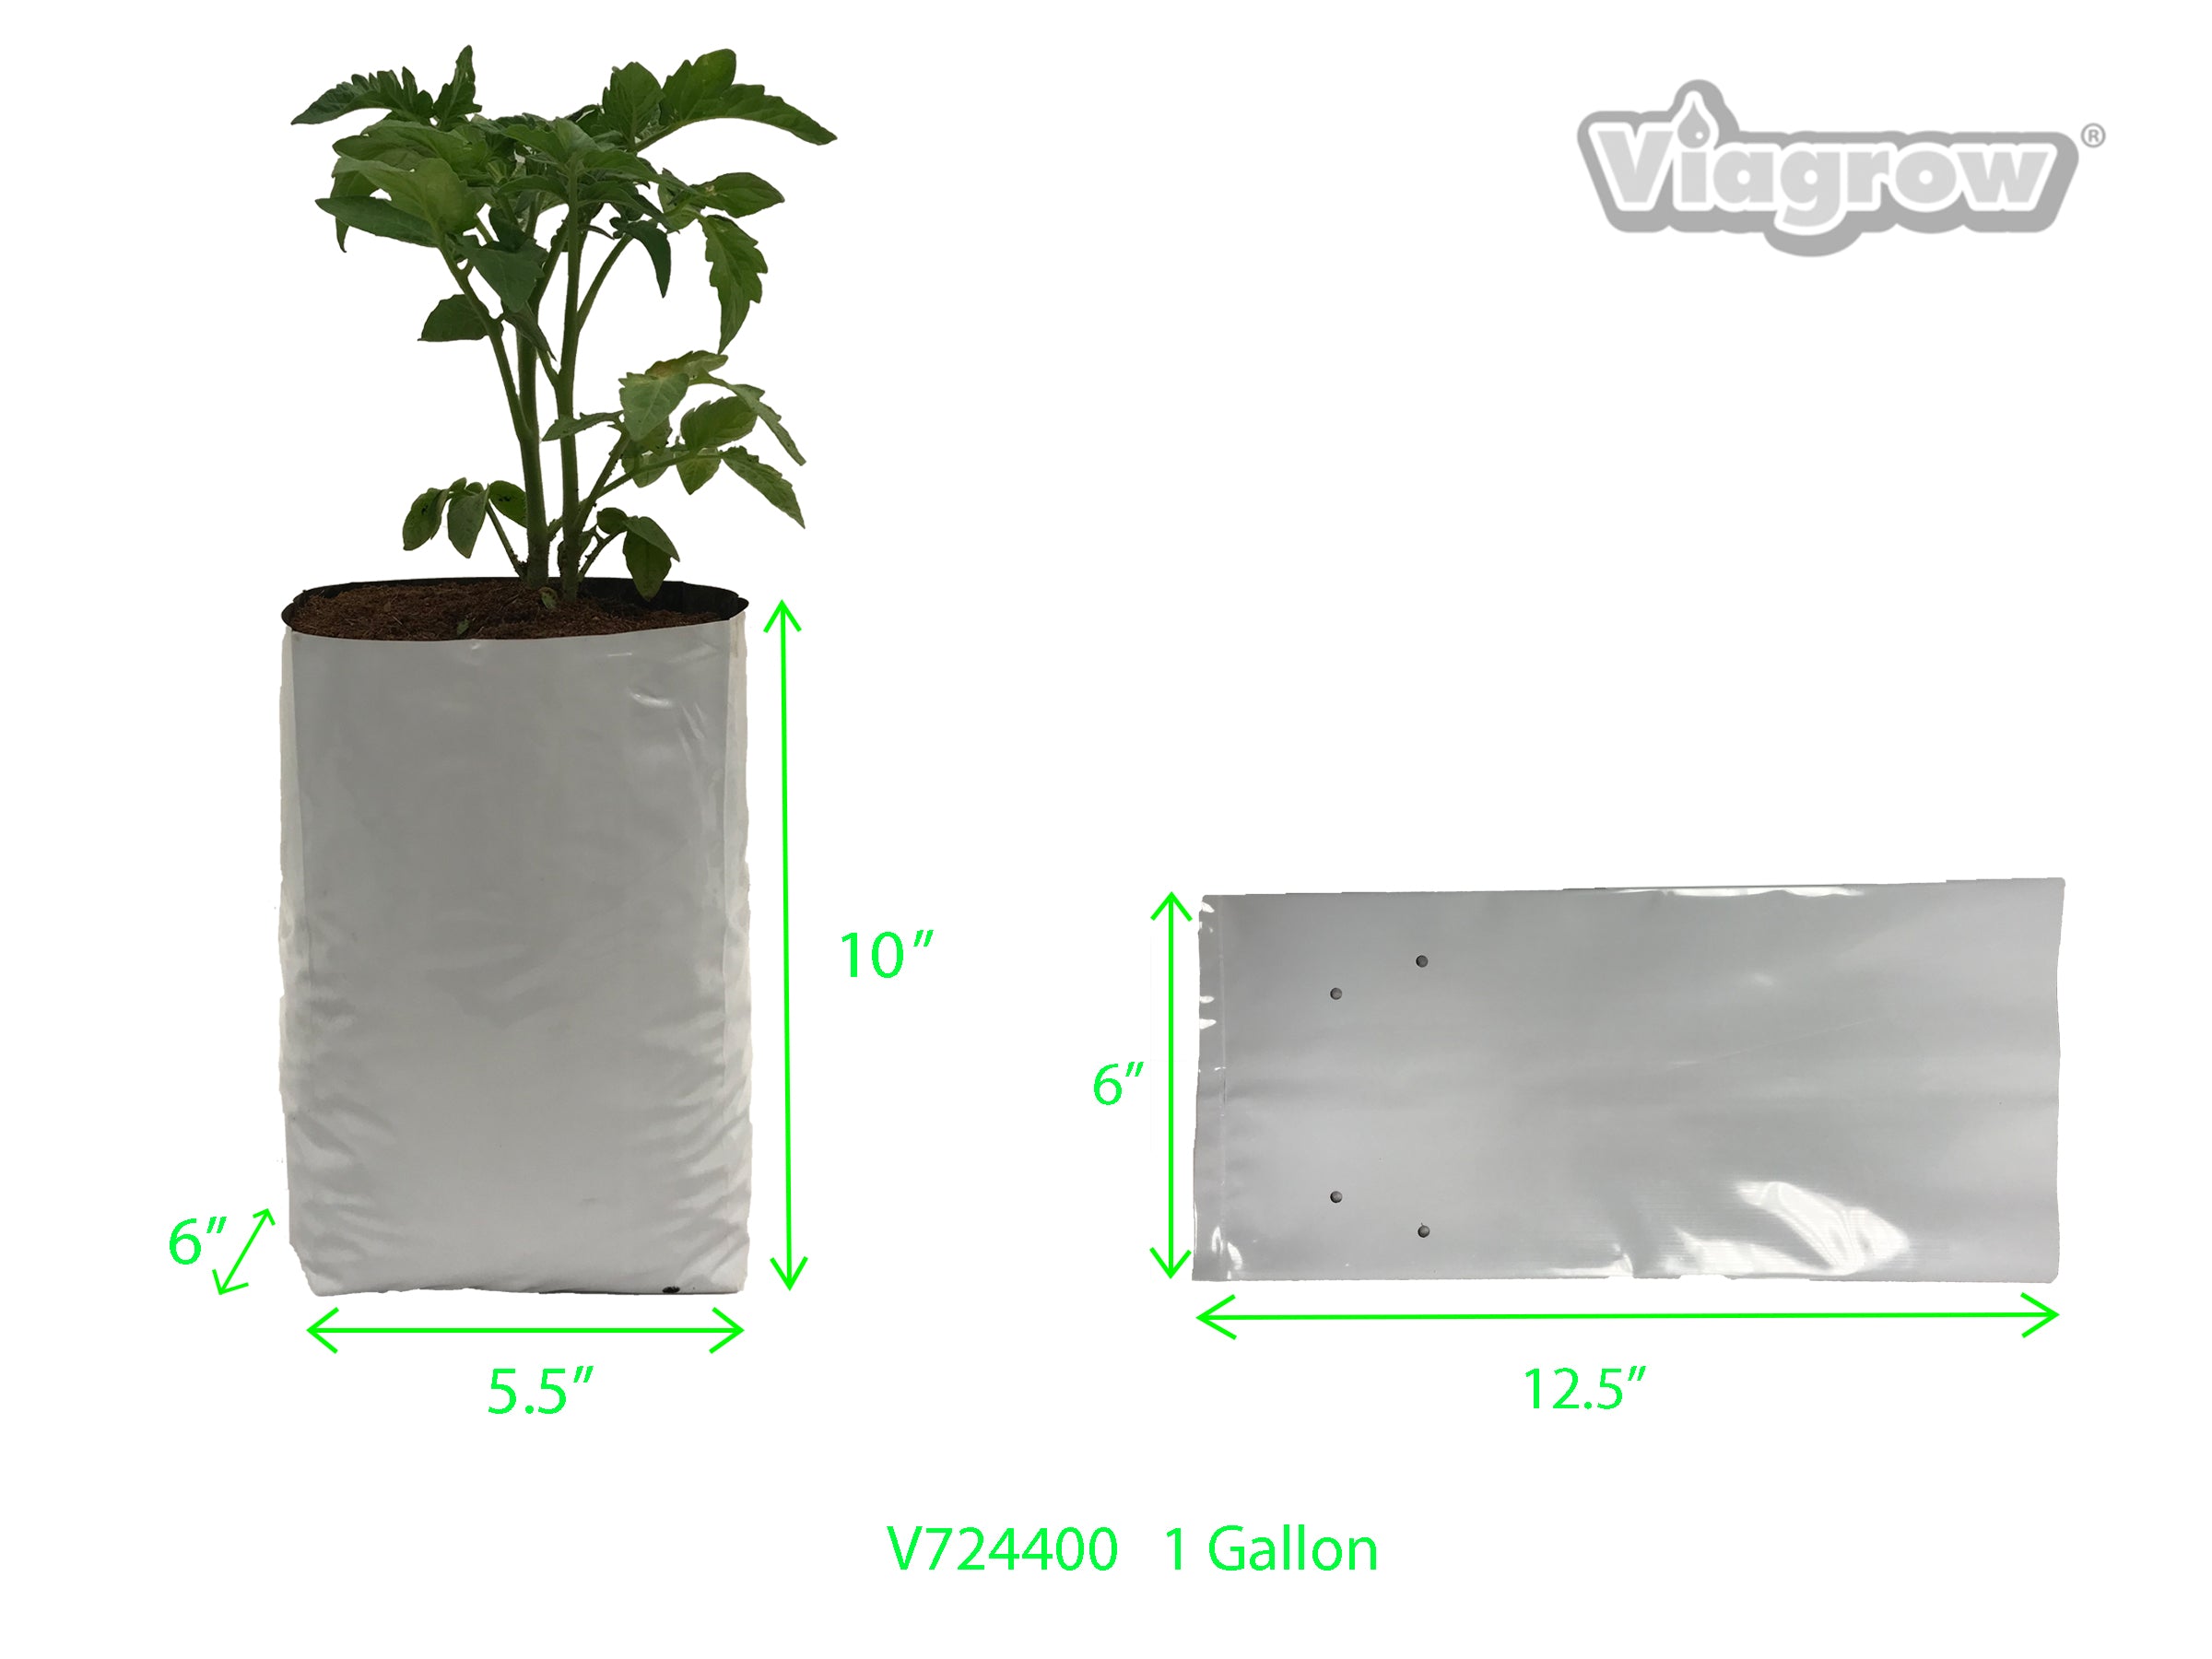 Viagrow 1 Gallon Plastic Grow Bag, Case of 1000